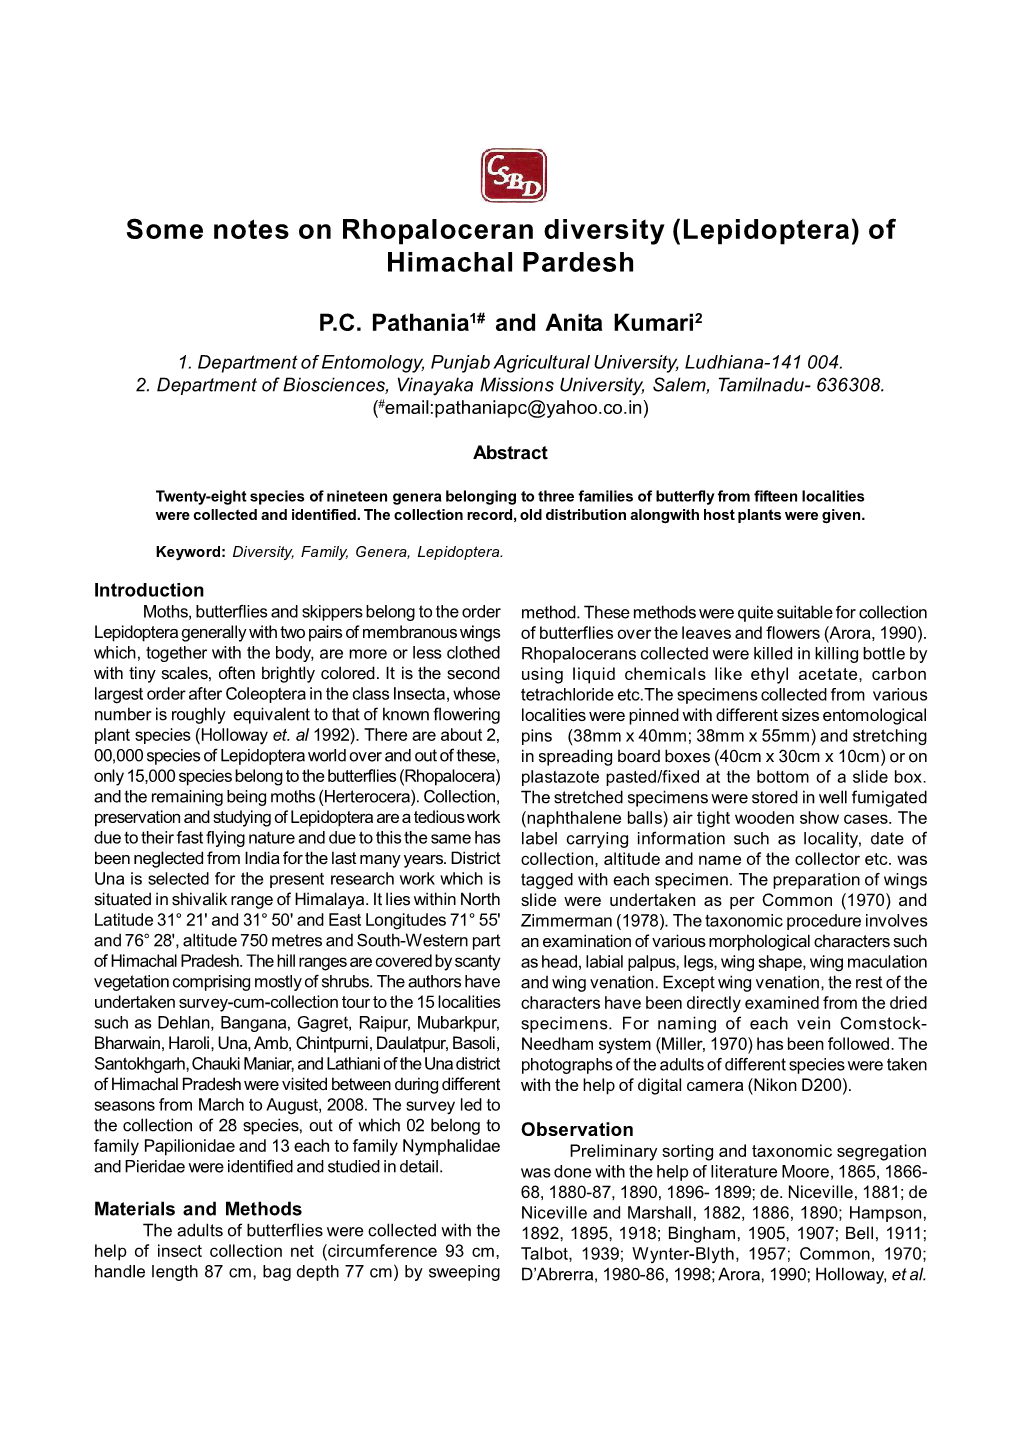 Some Notes on Rhopaloceran Diversity (Lepidoptera) of Himachal Pardesh